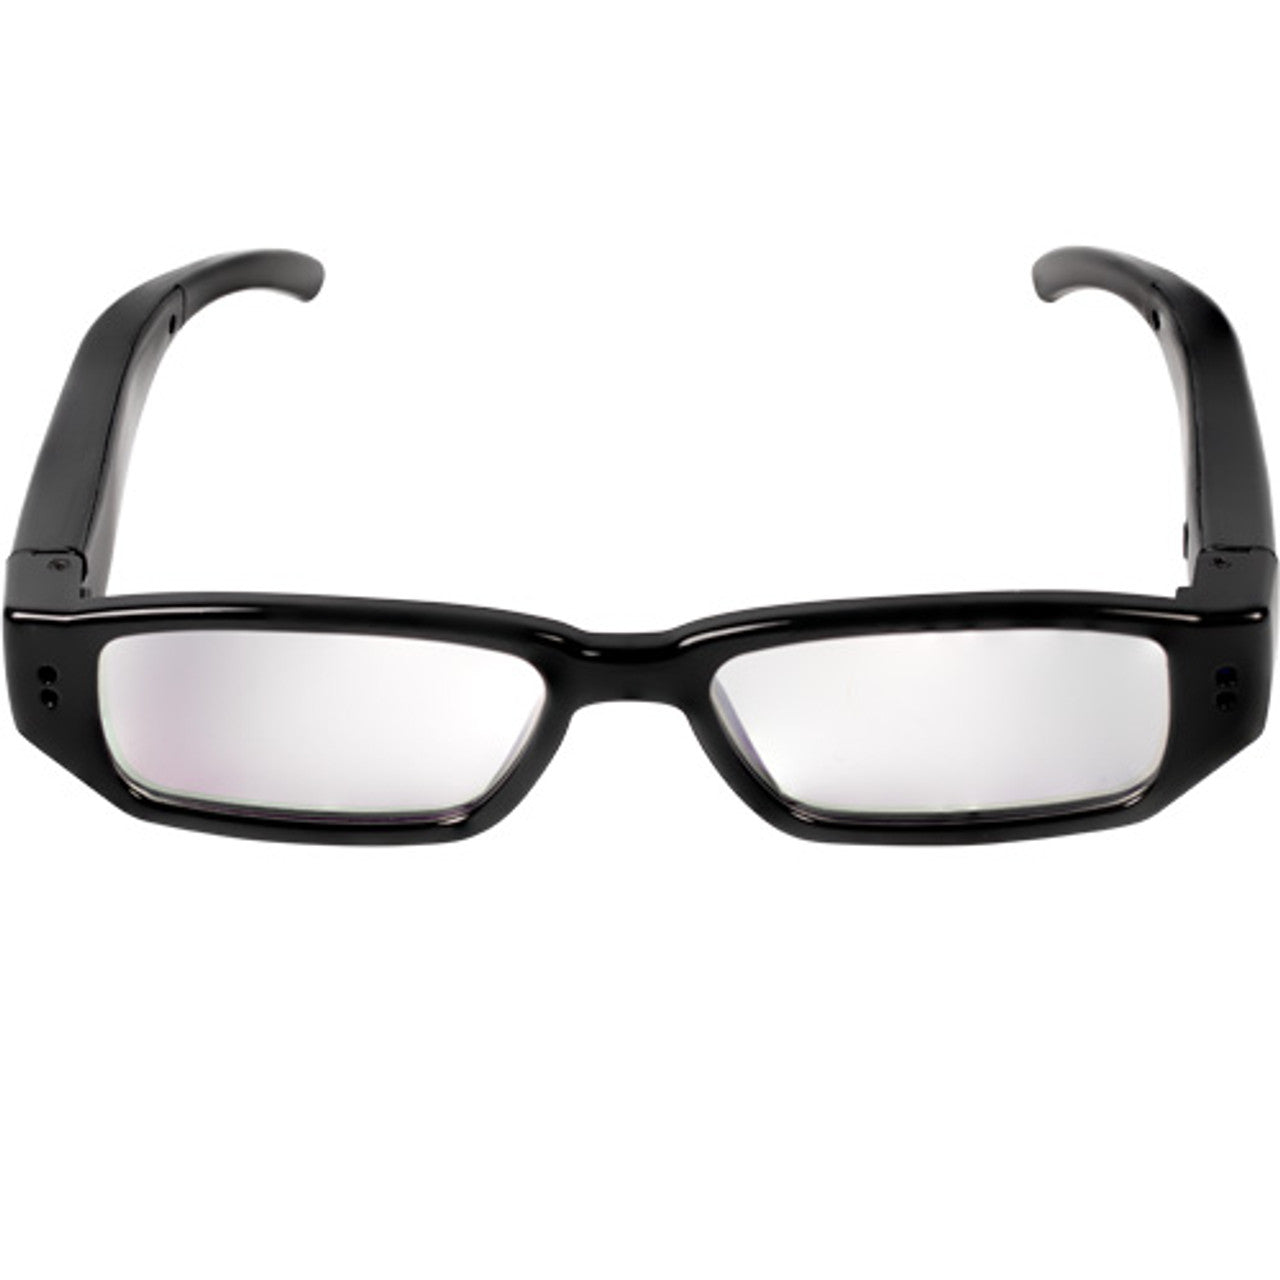 HD Eye Glasses Hidden Spy Camera With Built in DVR